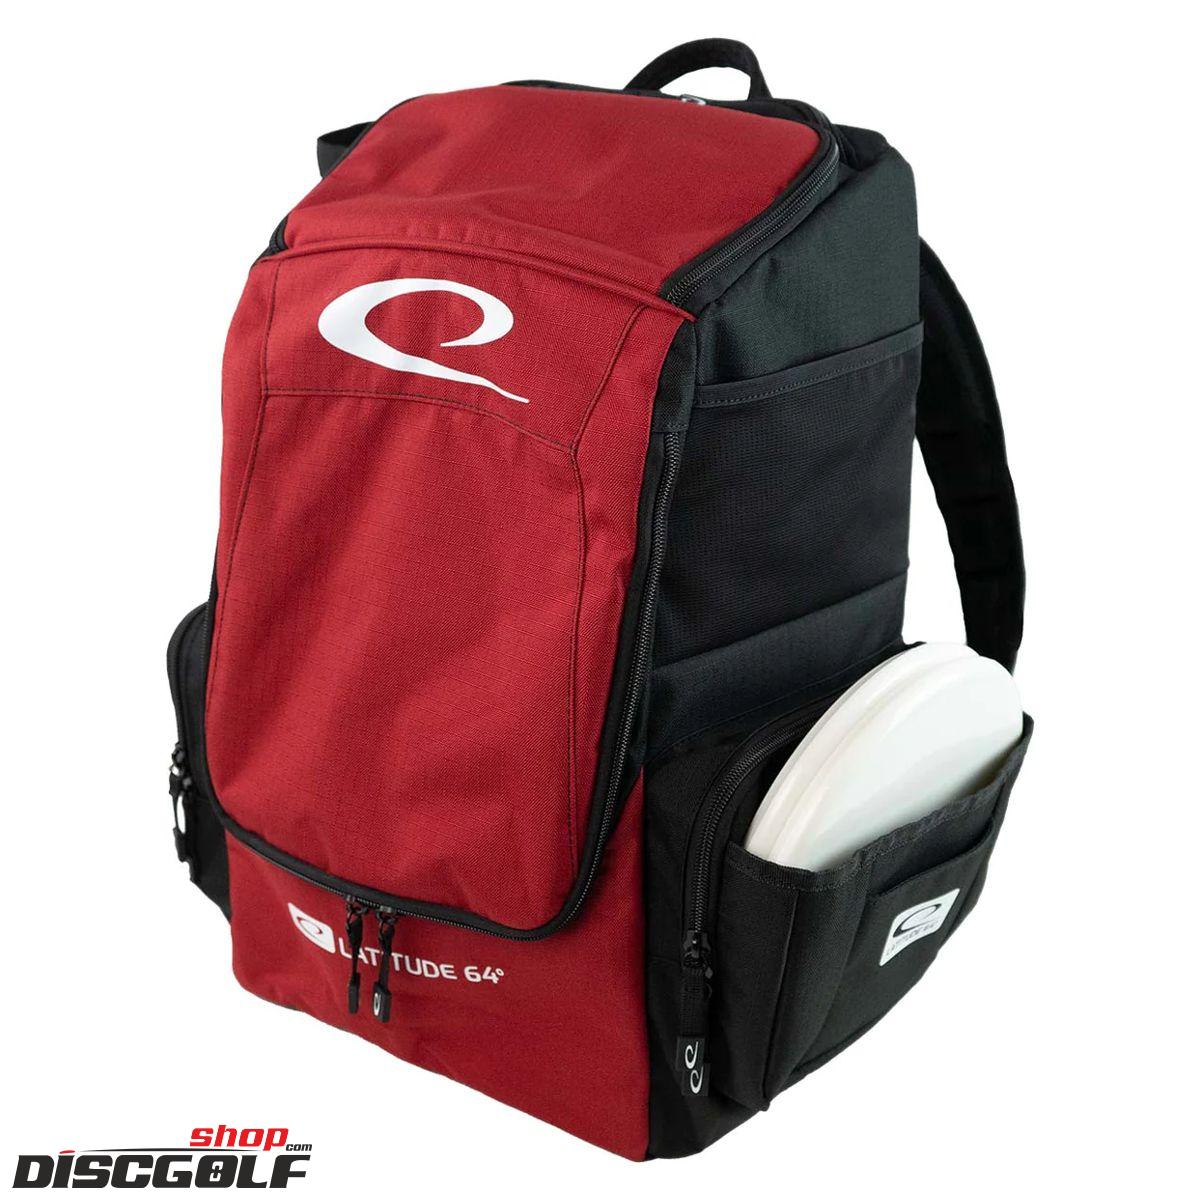 Latitude 64º Core Pro E2 Backpack - Černo-červ/Black-Rave-Red (discgolf)